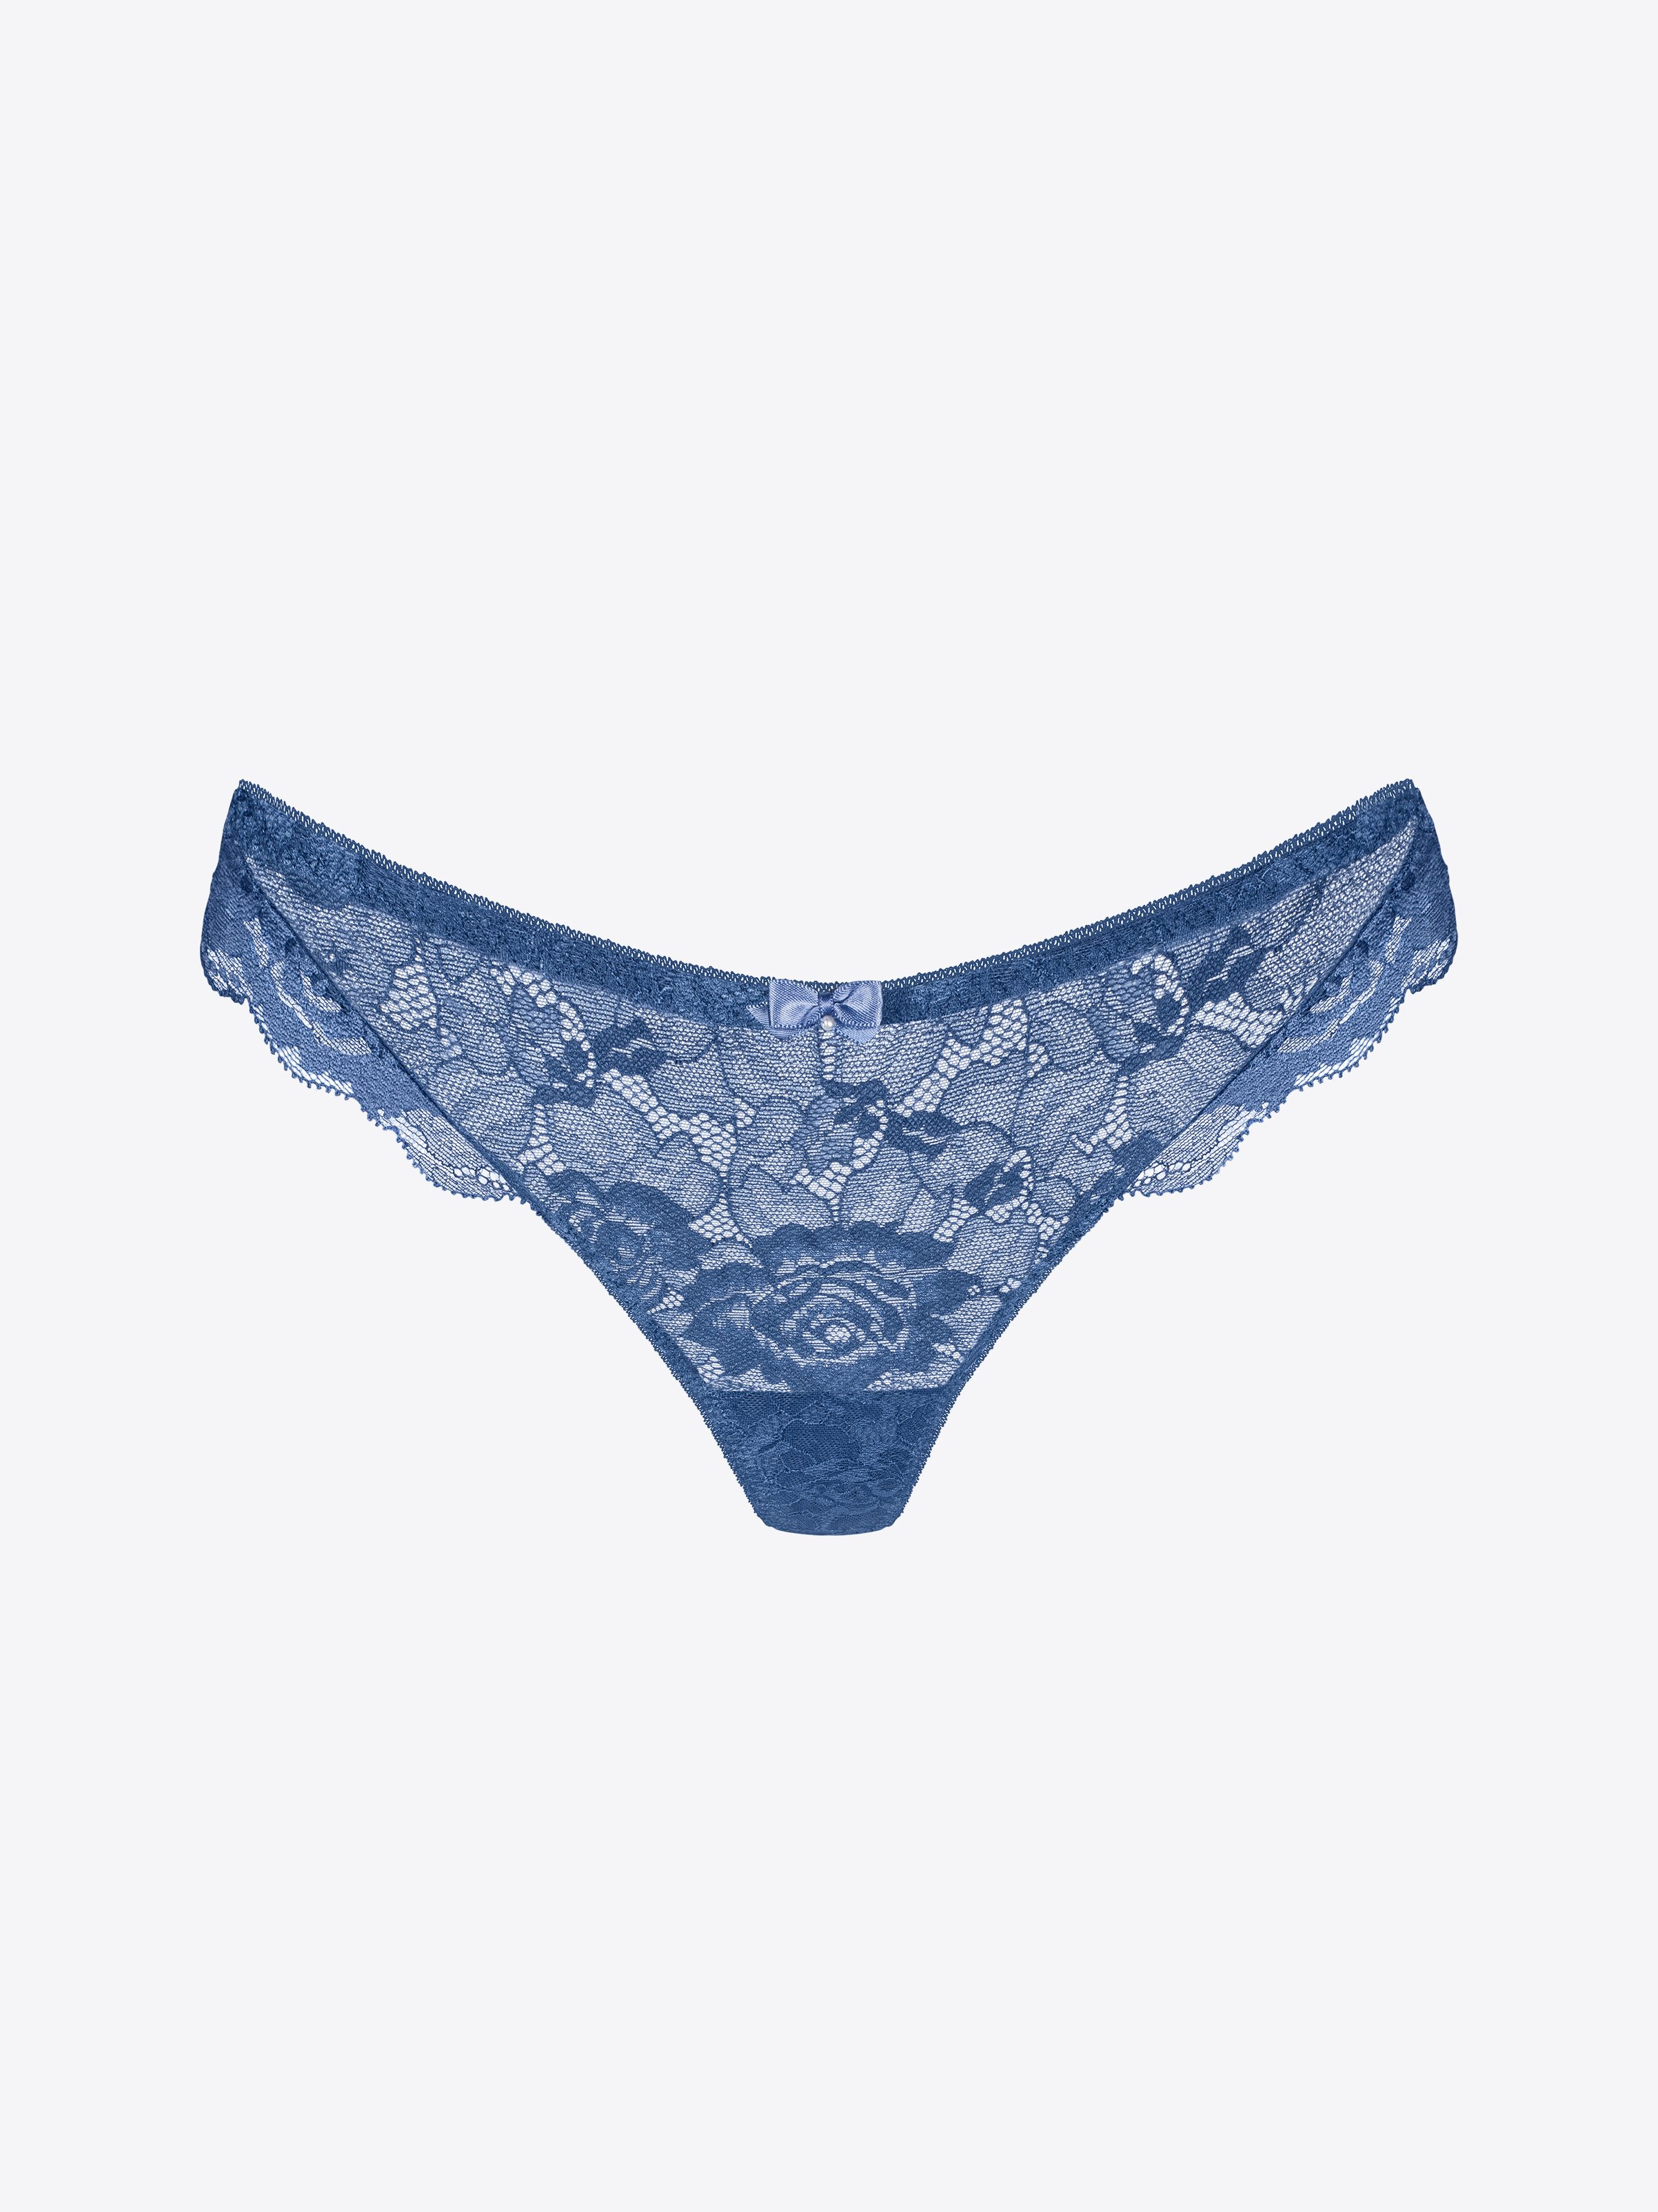 Seamless Panties Women Thong Women Lace Panties Thong Women *2* (Color : Navy  Blue, Size : Small) 